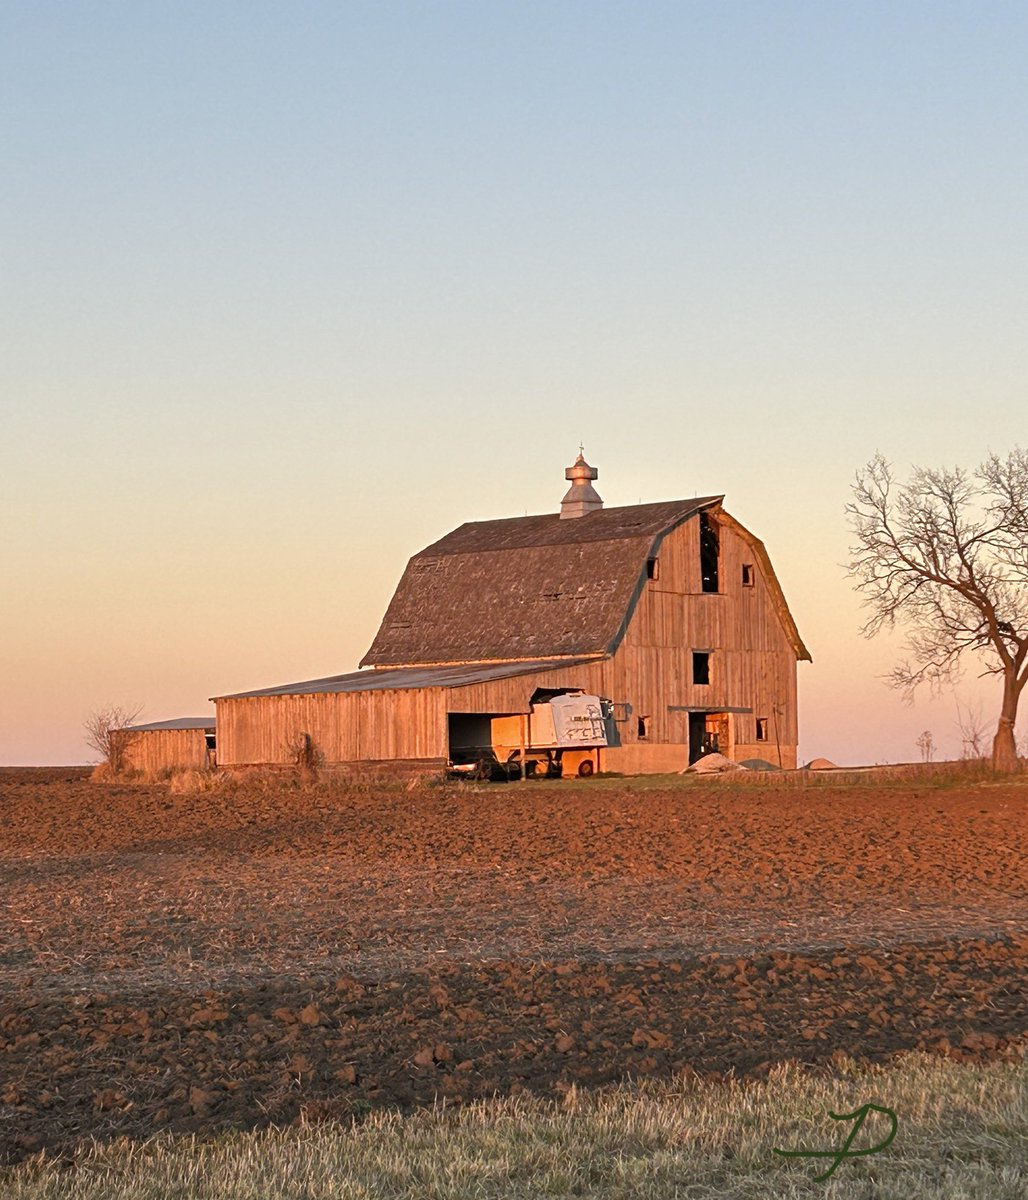 Were you born in a barn?#2
#BarnPhotography